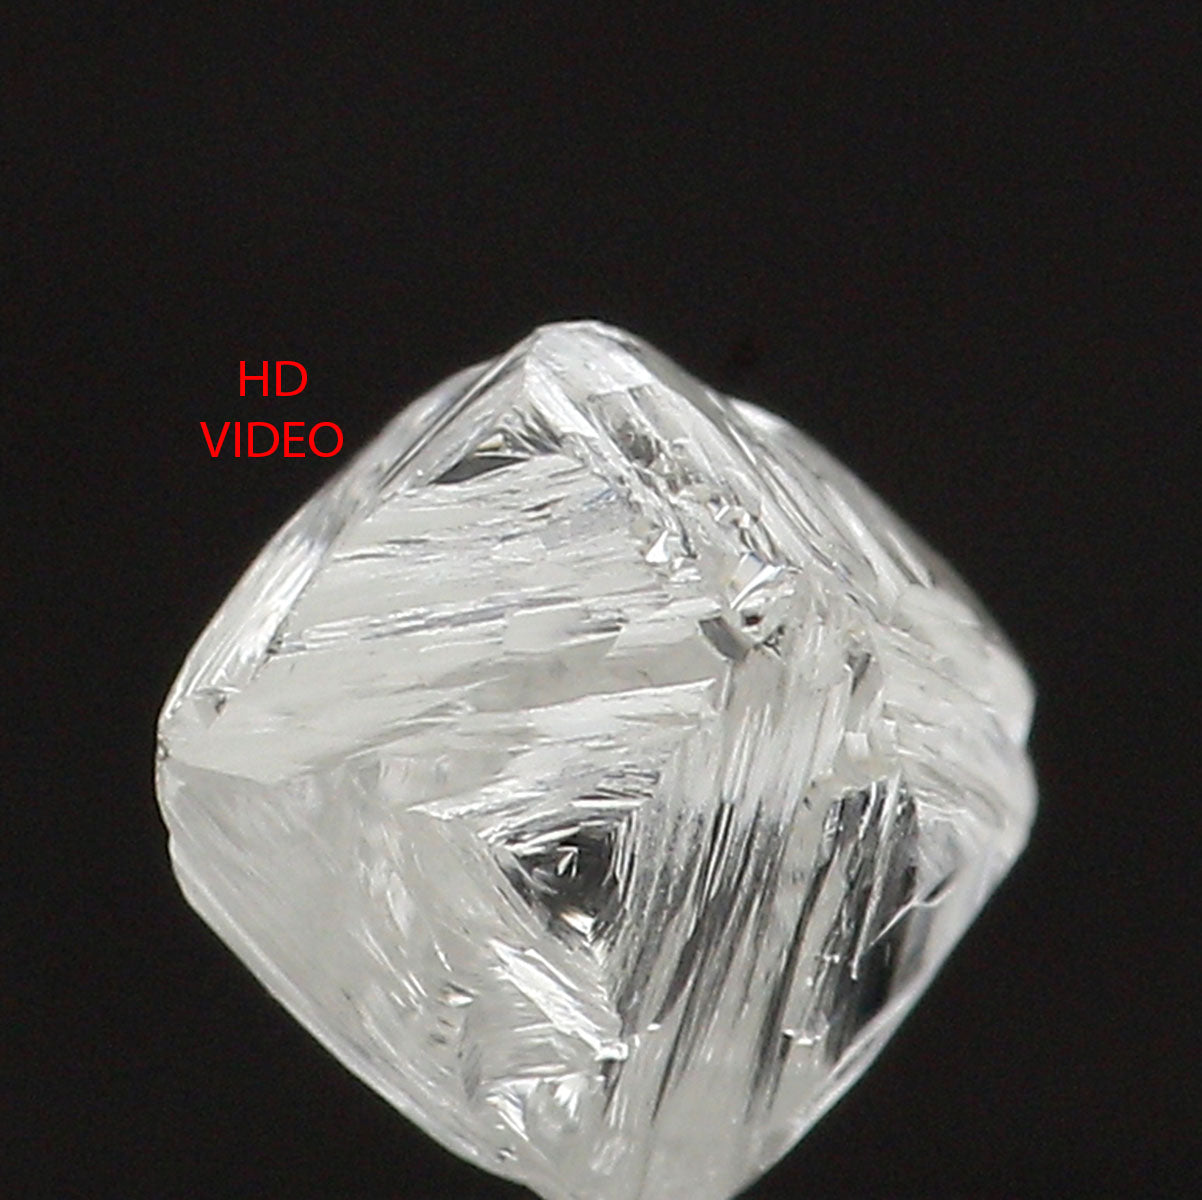 All Type Fancy Shape Color Loose Diamond